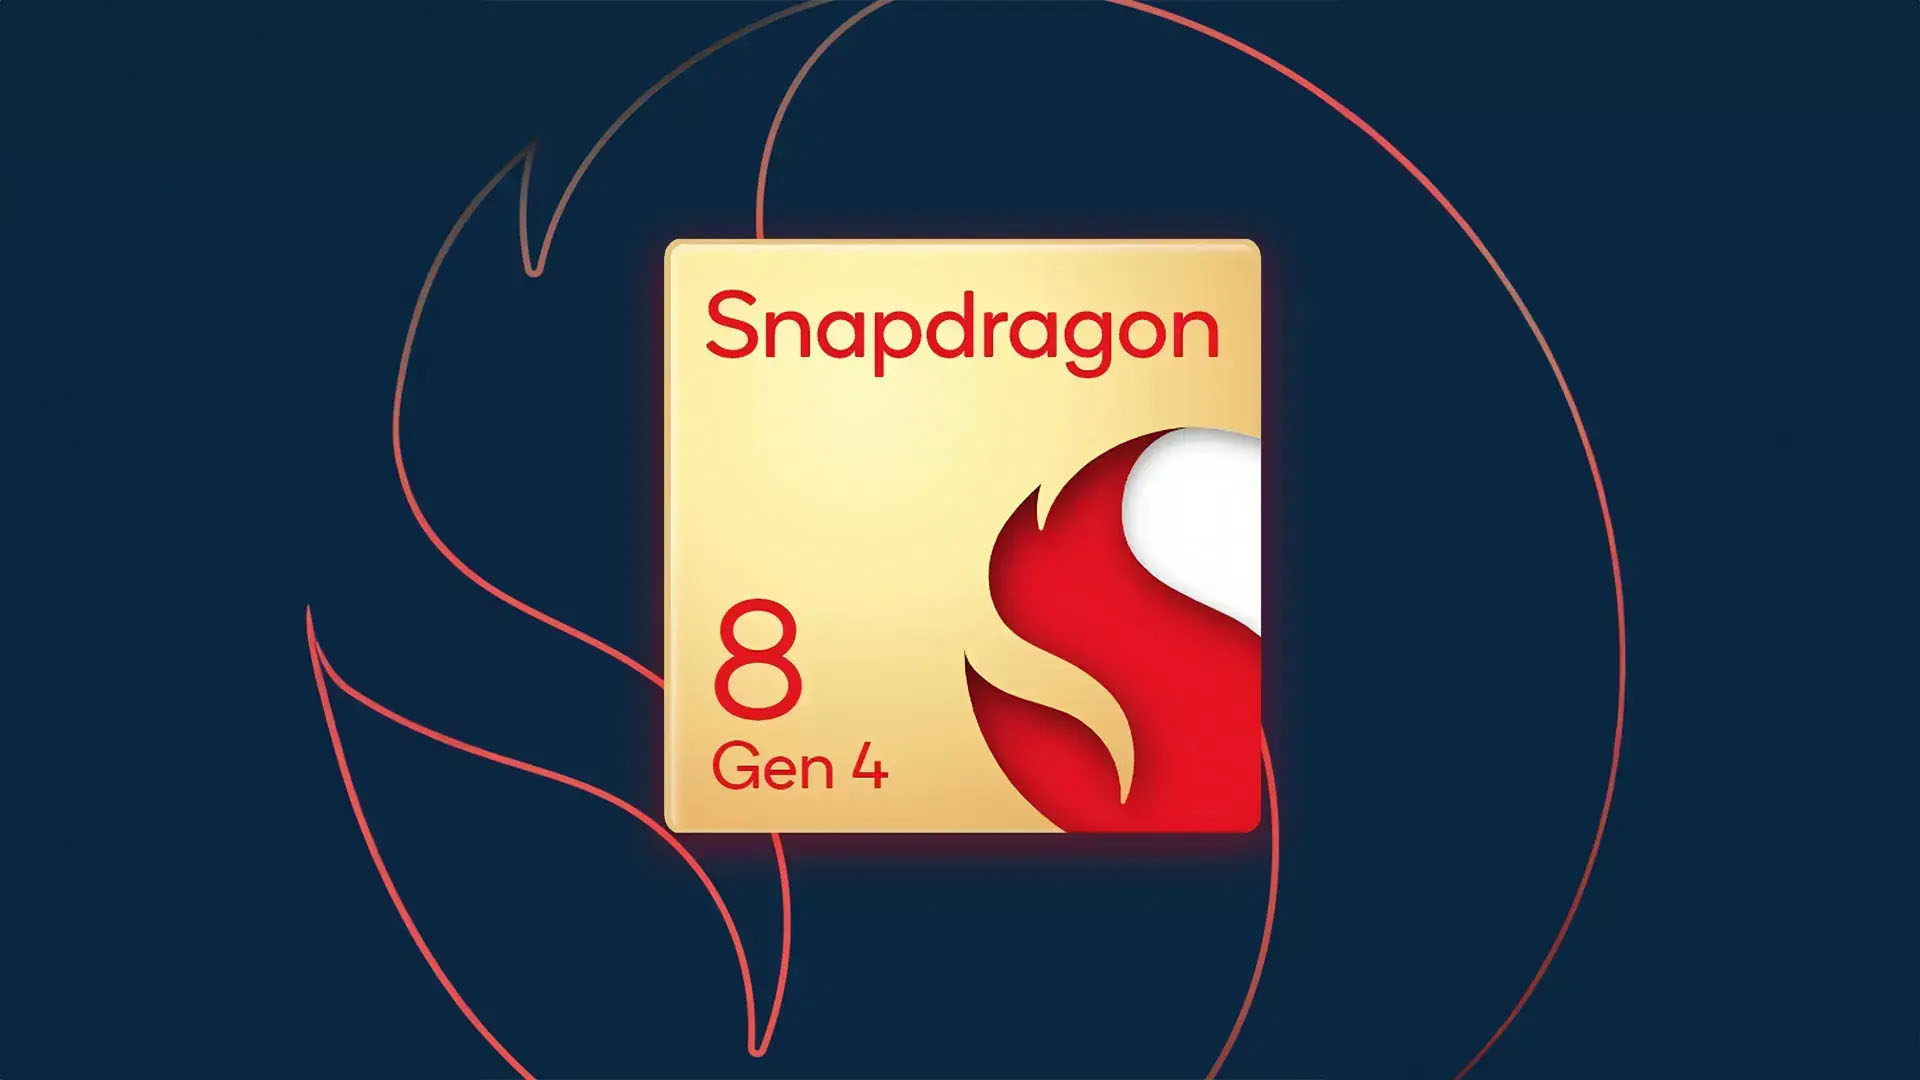 snapdragon 8 gen 4 cikis tarihi belli oldu